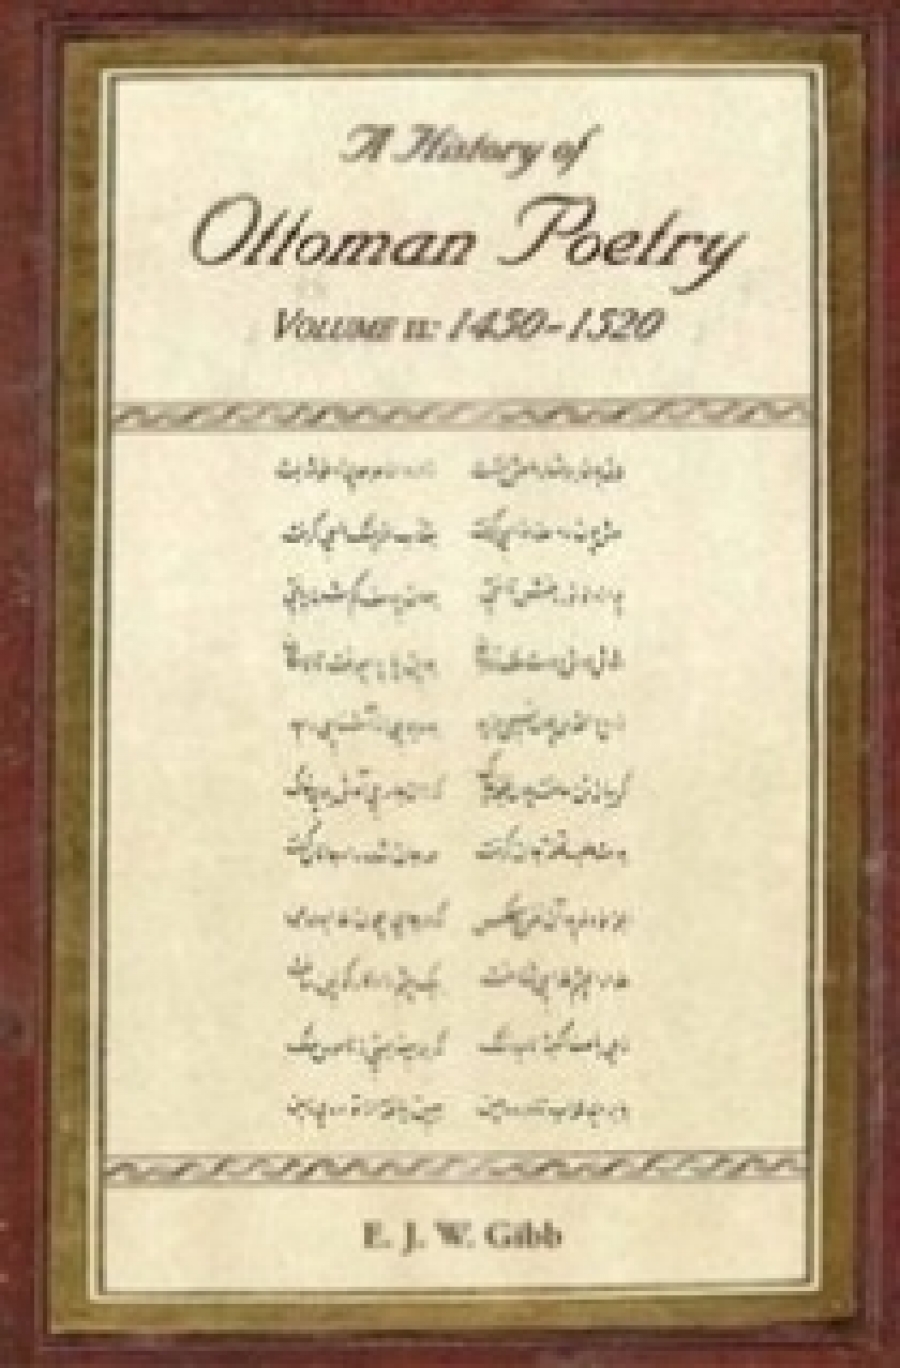 E. J. W. Gibb A History of Ottoman Poetry Volume II 